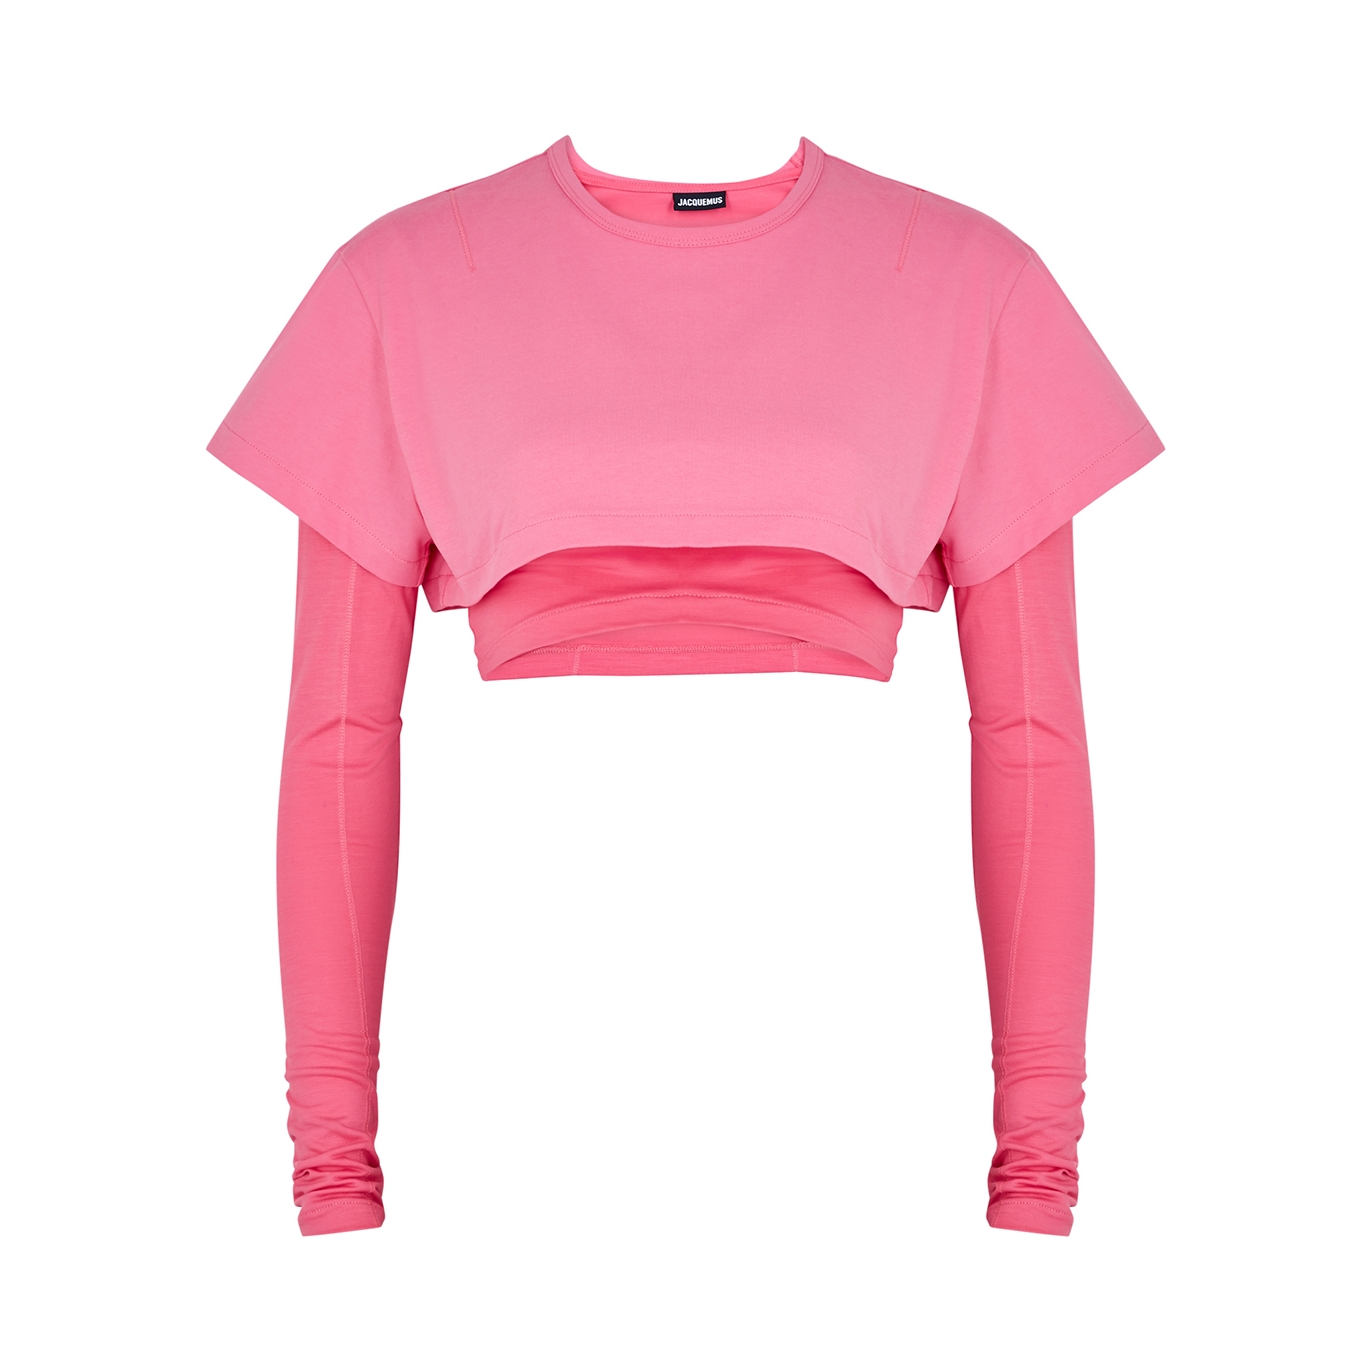 Jacquemus Le Double T-shirt Pink Layered Cotton Top - M